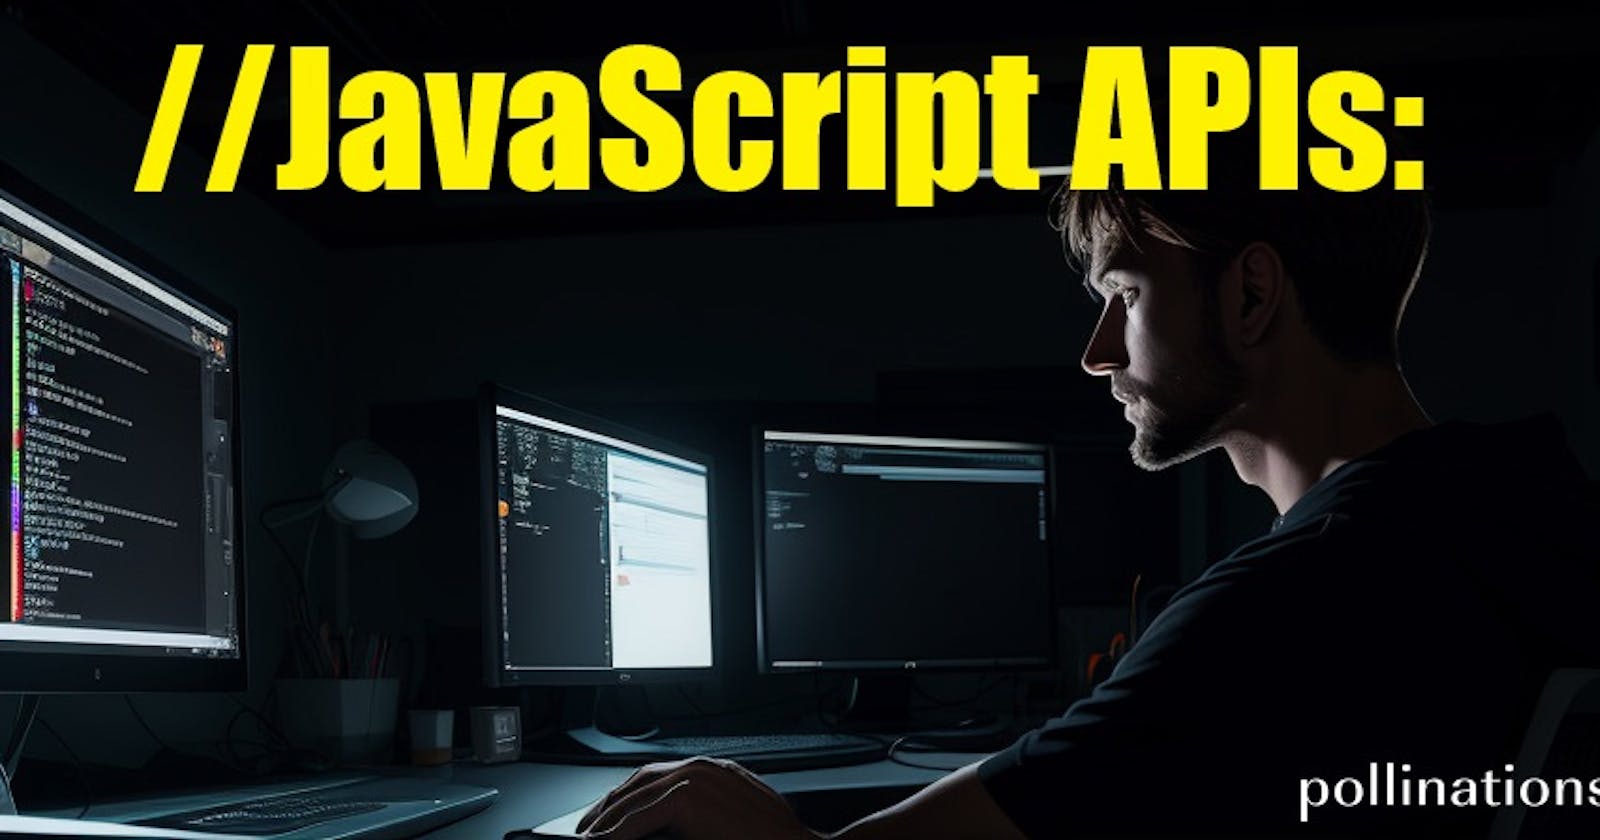 Javasript APIs as a Python Developer